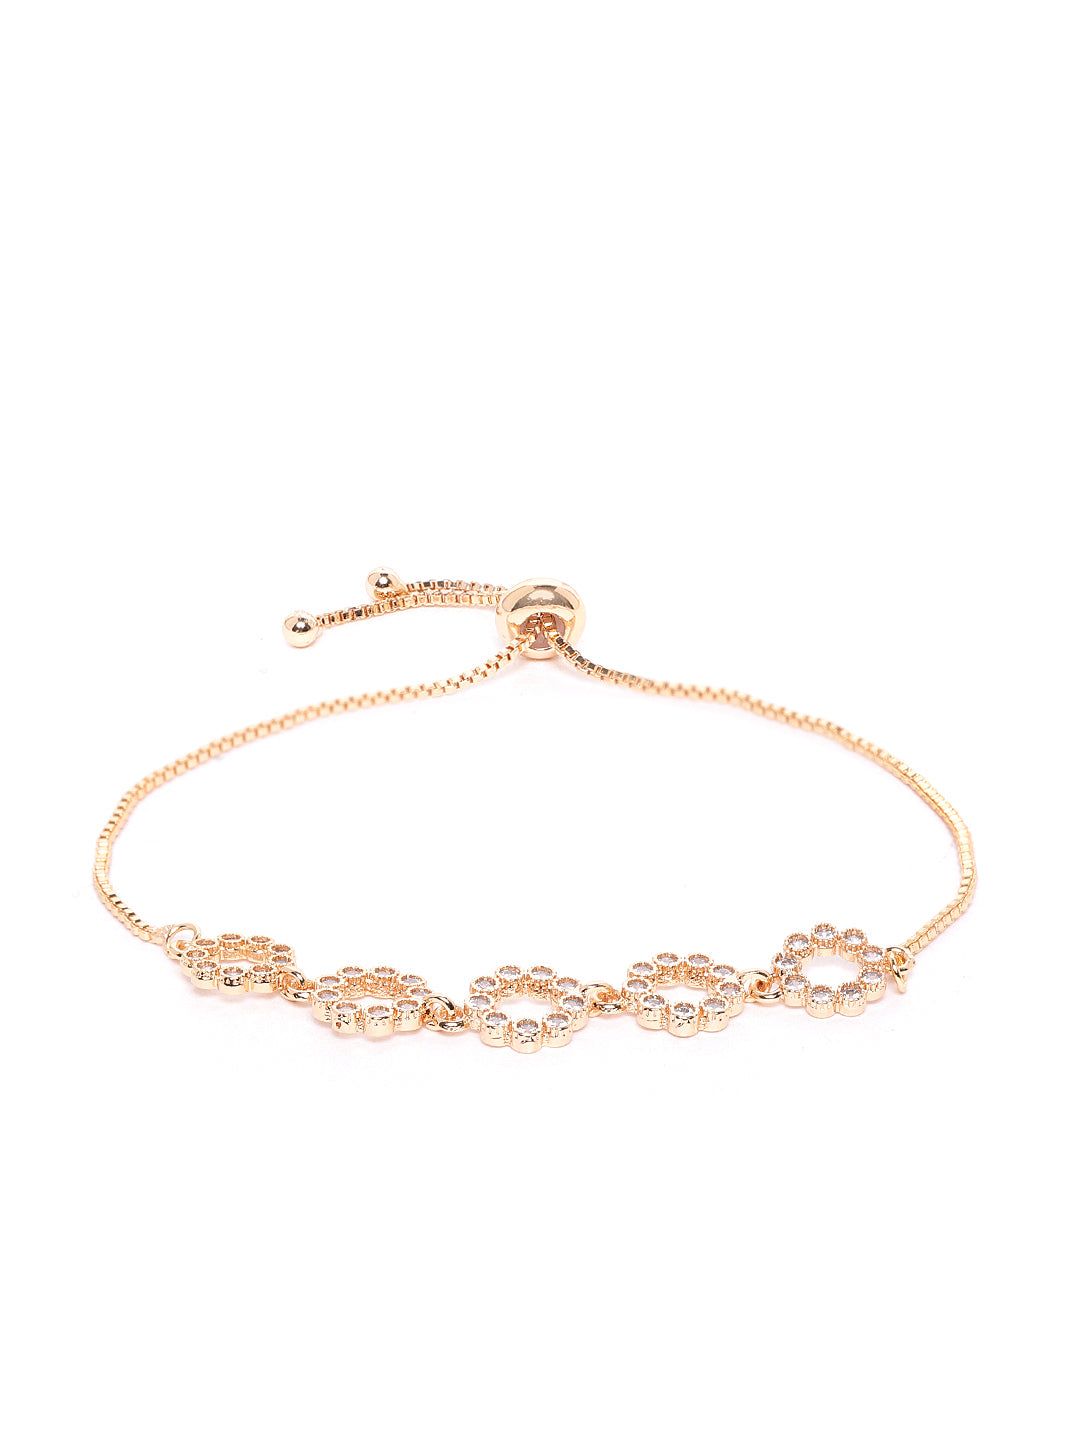 Blueberry gold plated stone embellished adjustable chain bracelet